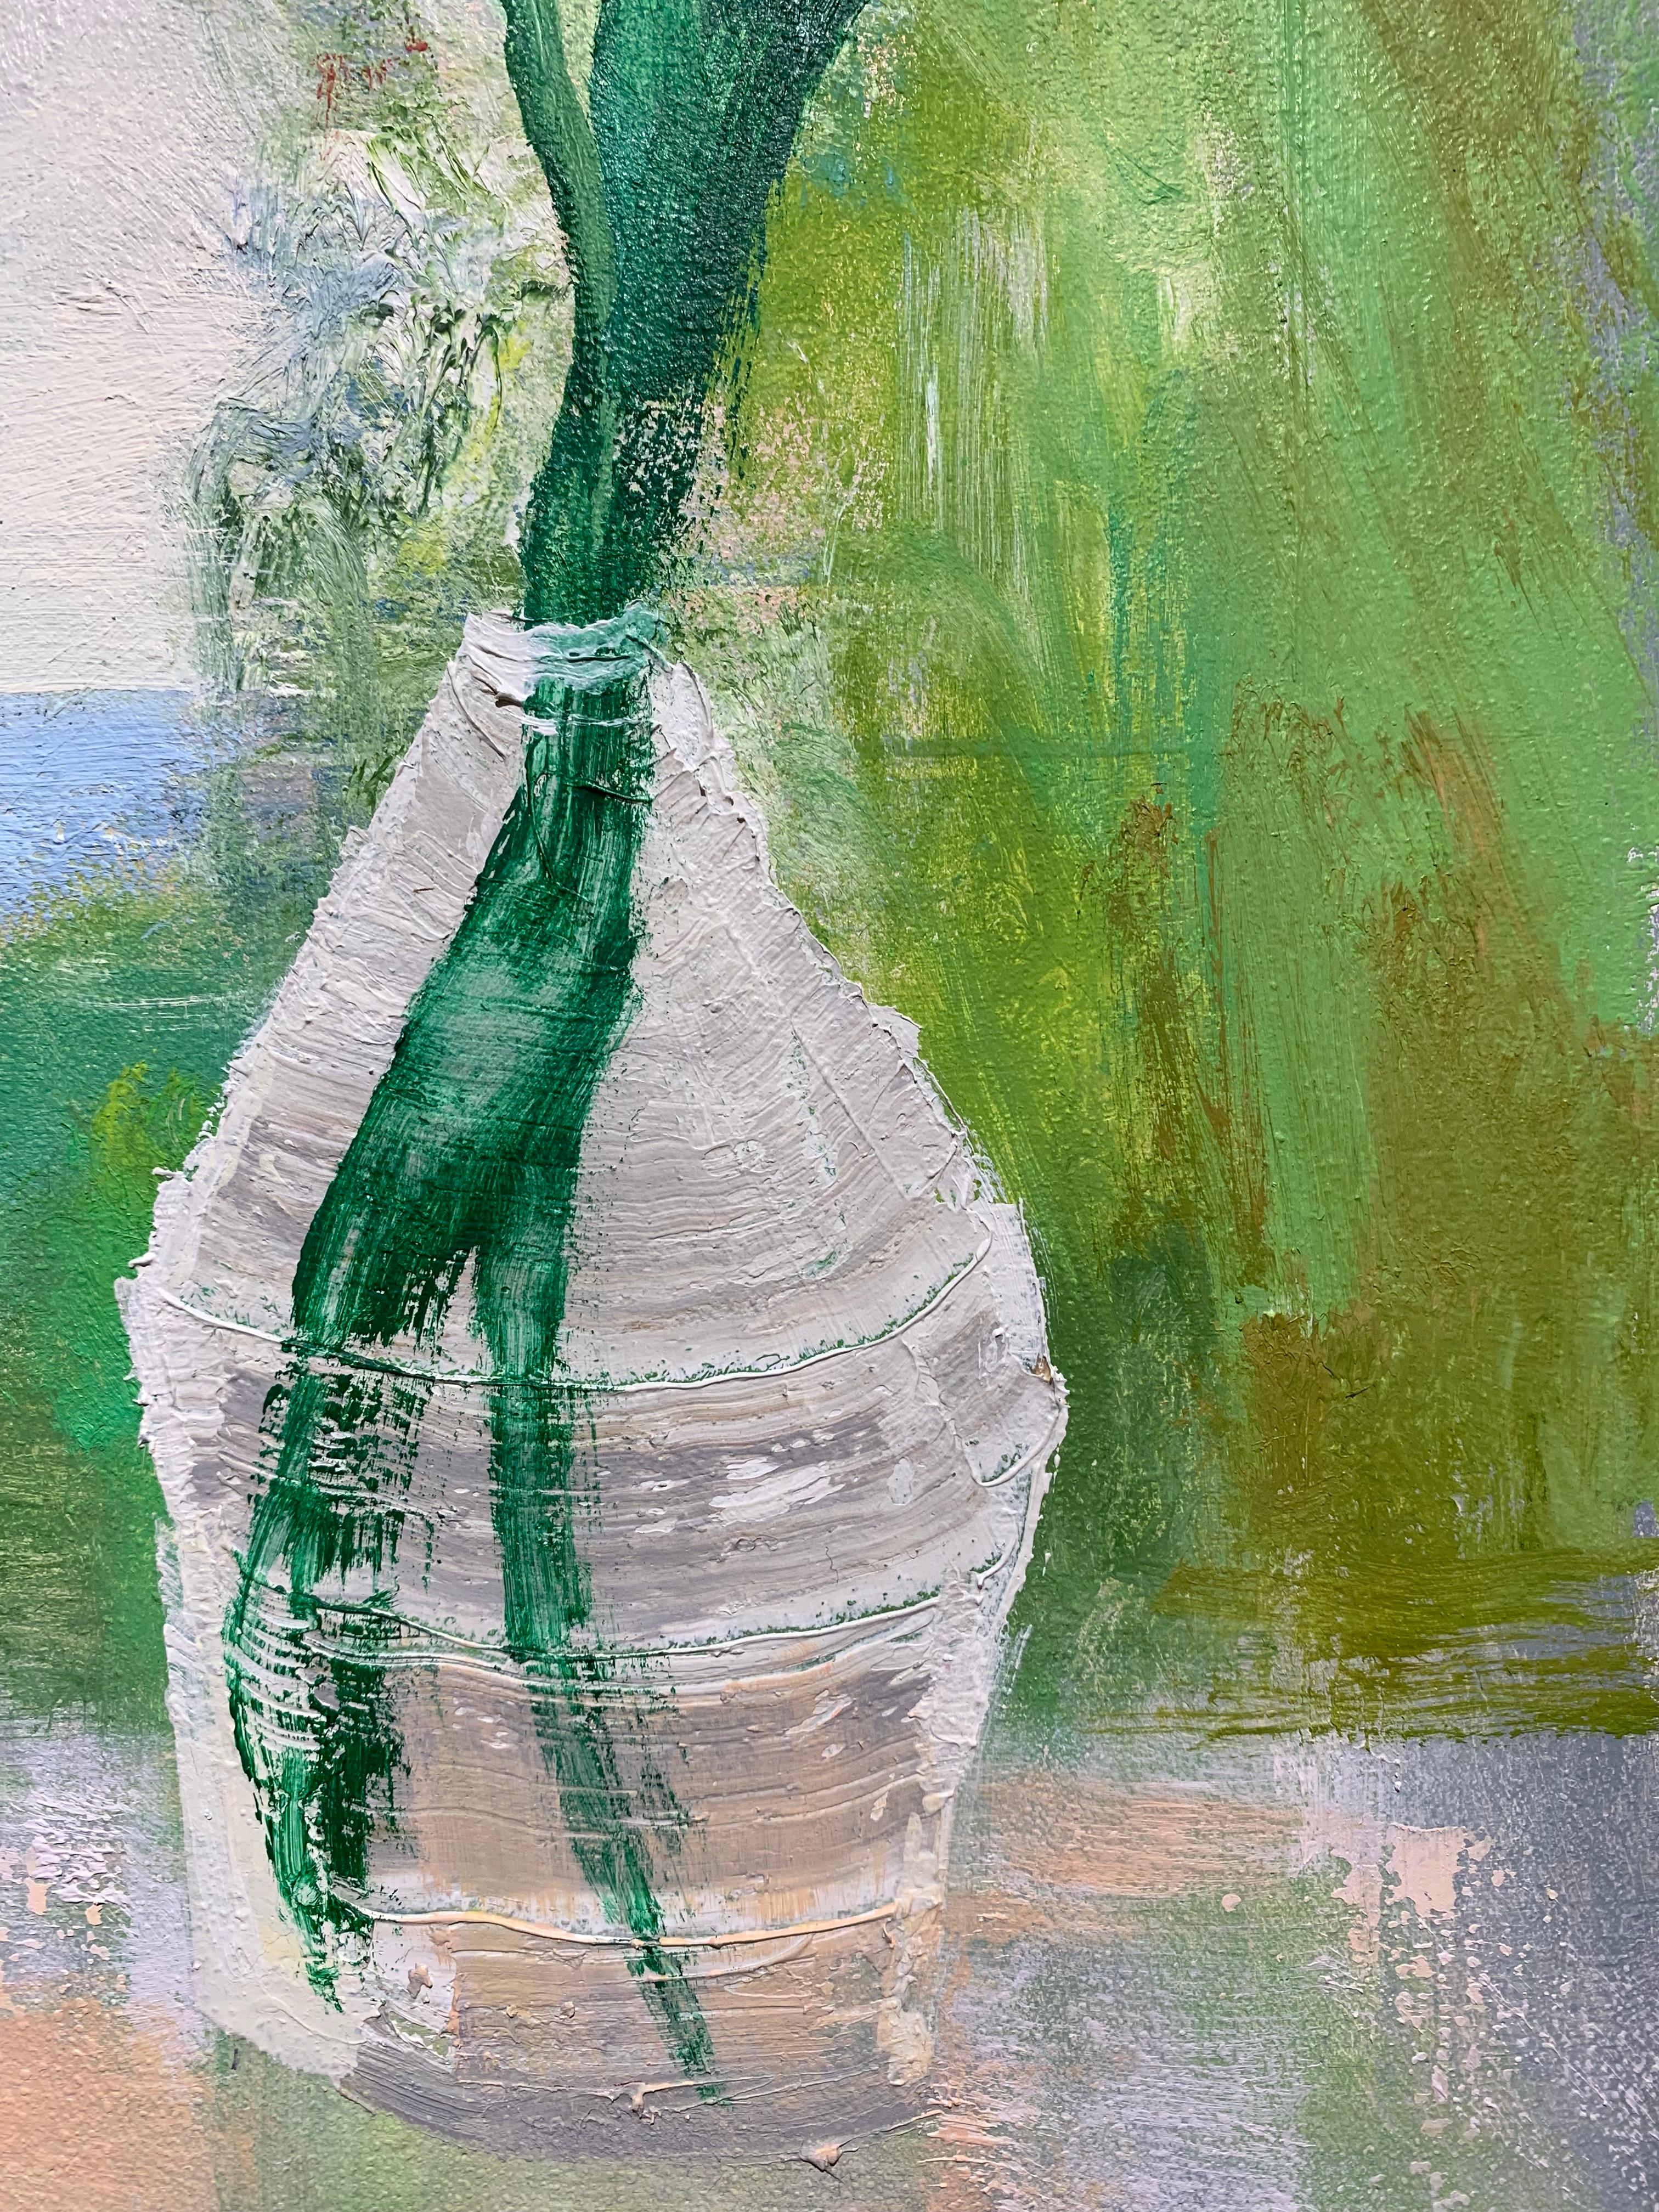 Melanie Parke, Sunday Tulip, impressionist oil on canvas floral still life, 2019 3